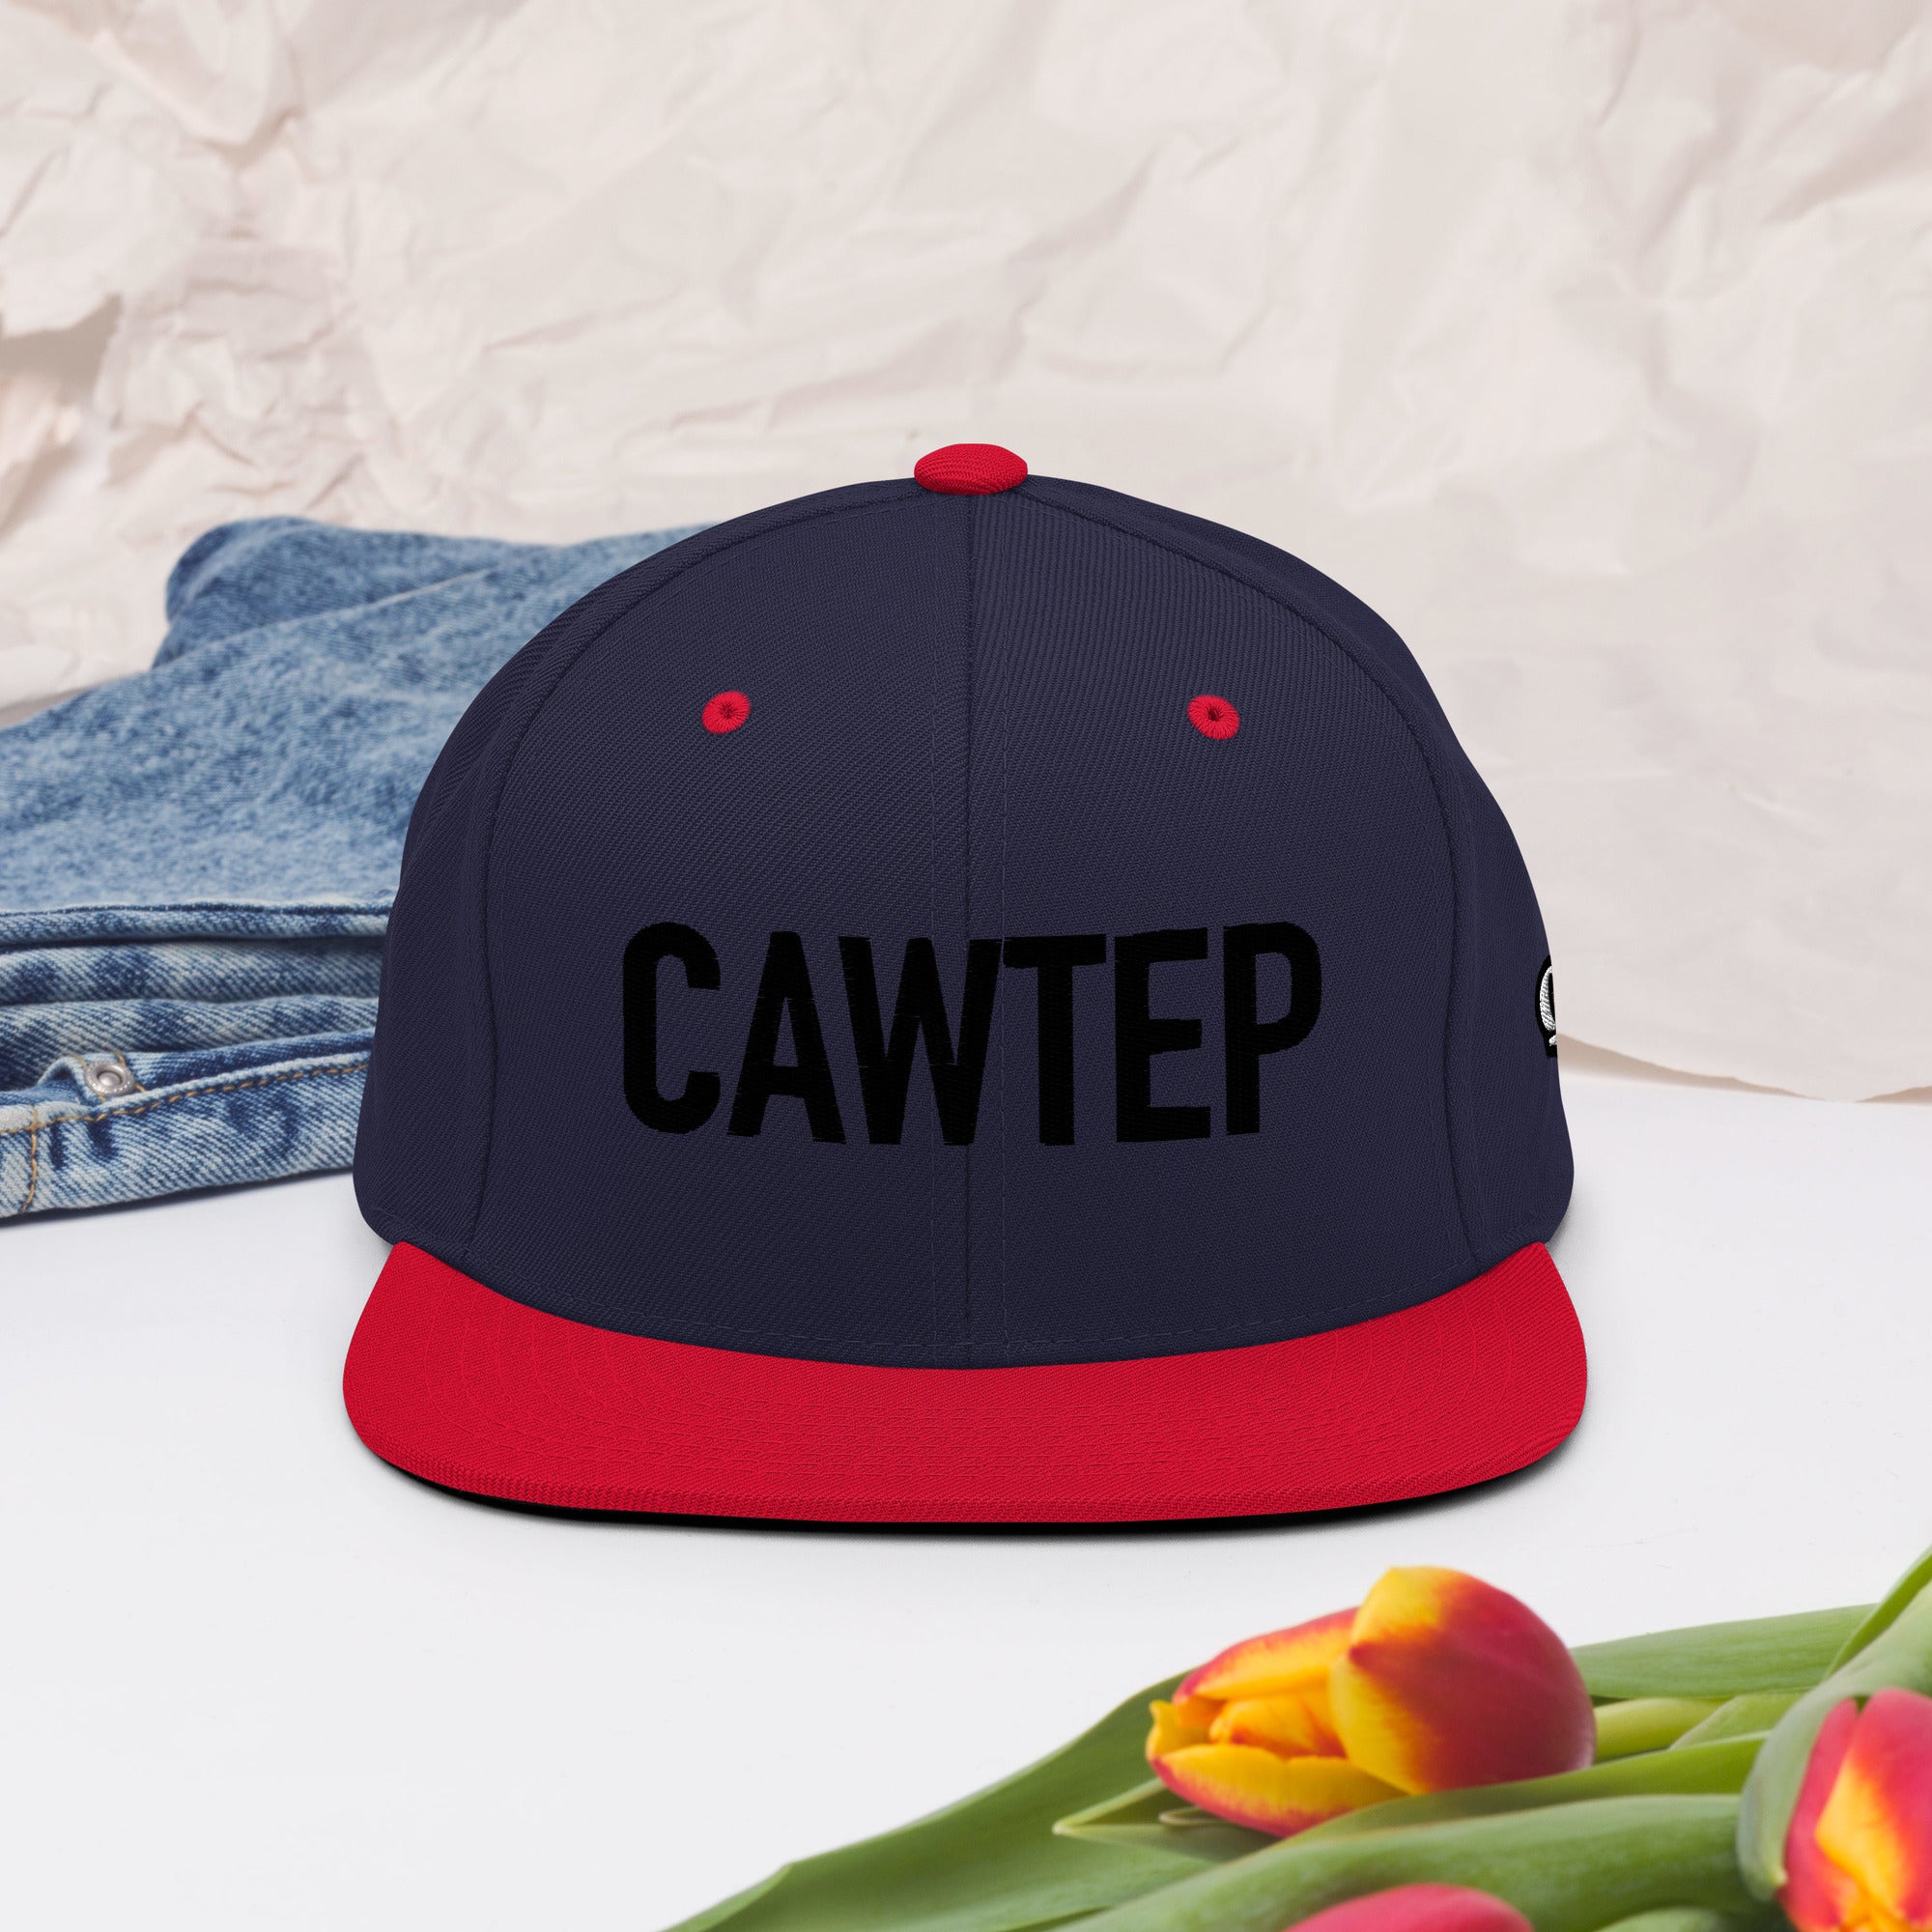 Cawtep Snapback Hat